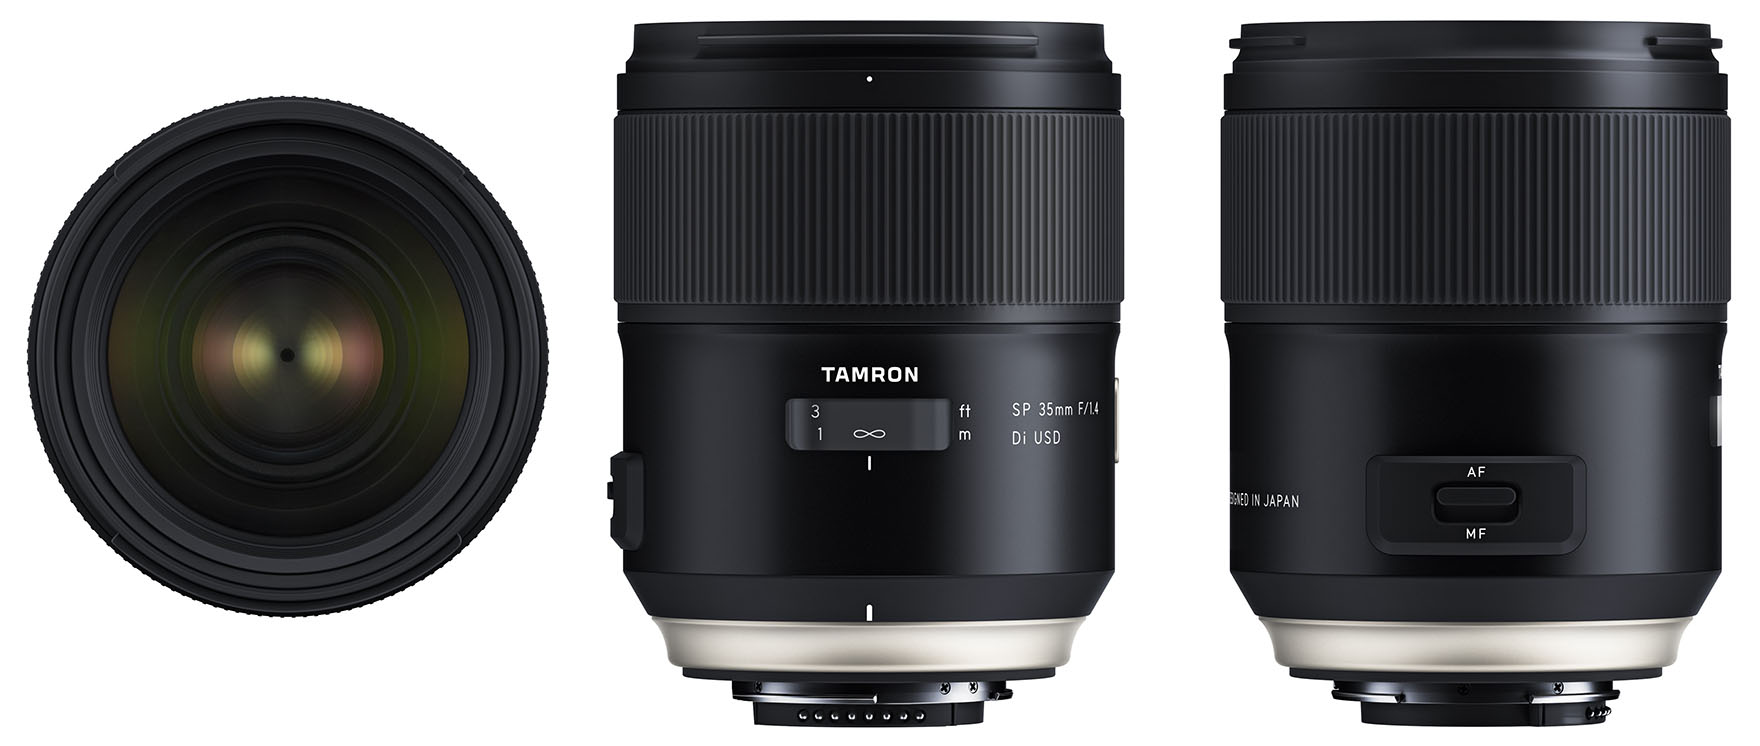 Tamron-SP-35mm-f1.4-Di-USD-lens-2.jpg